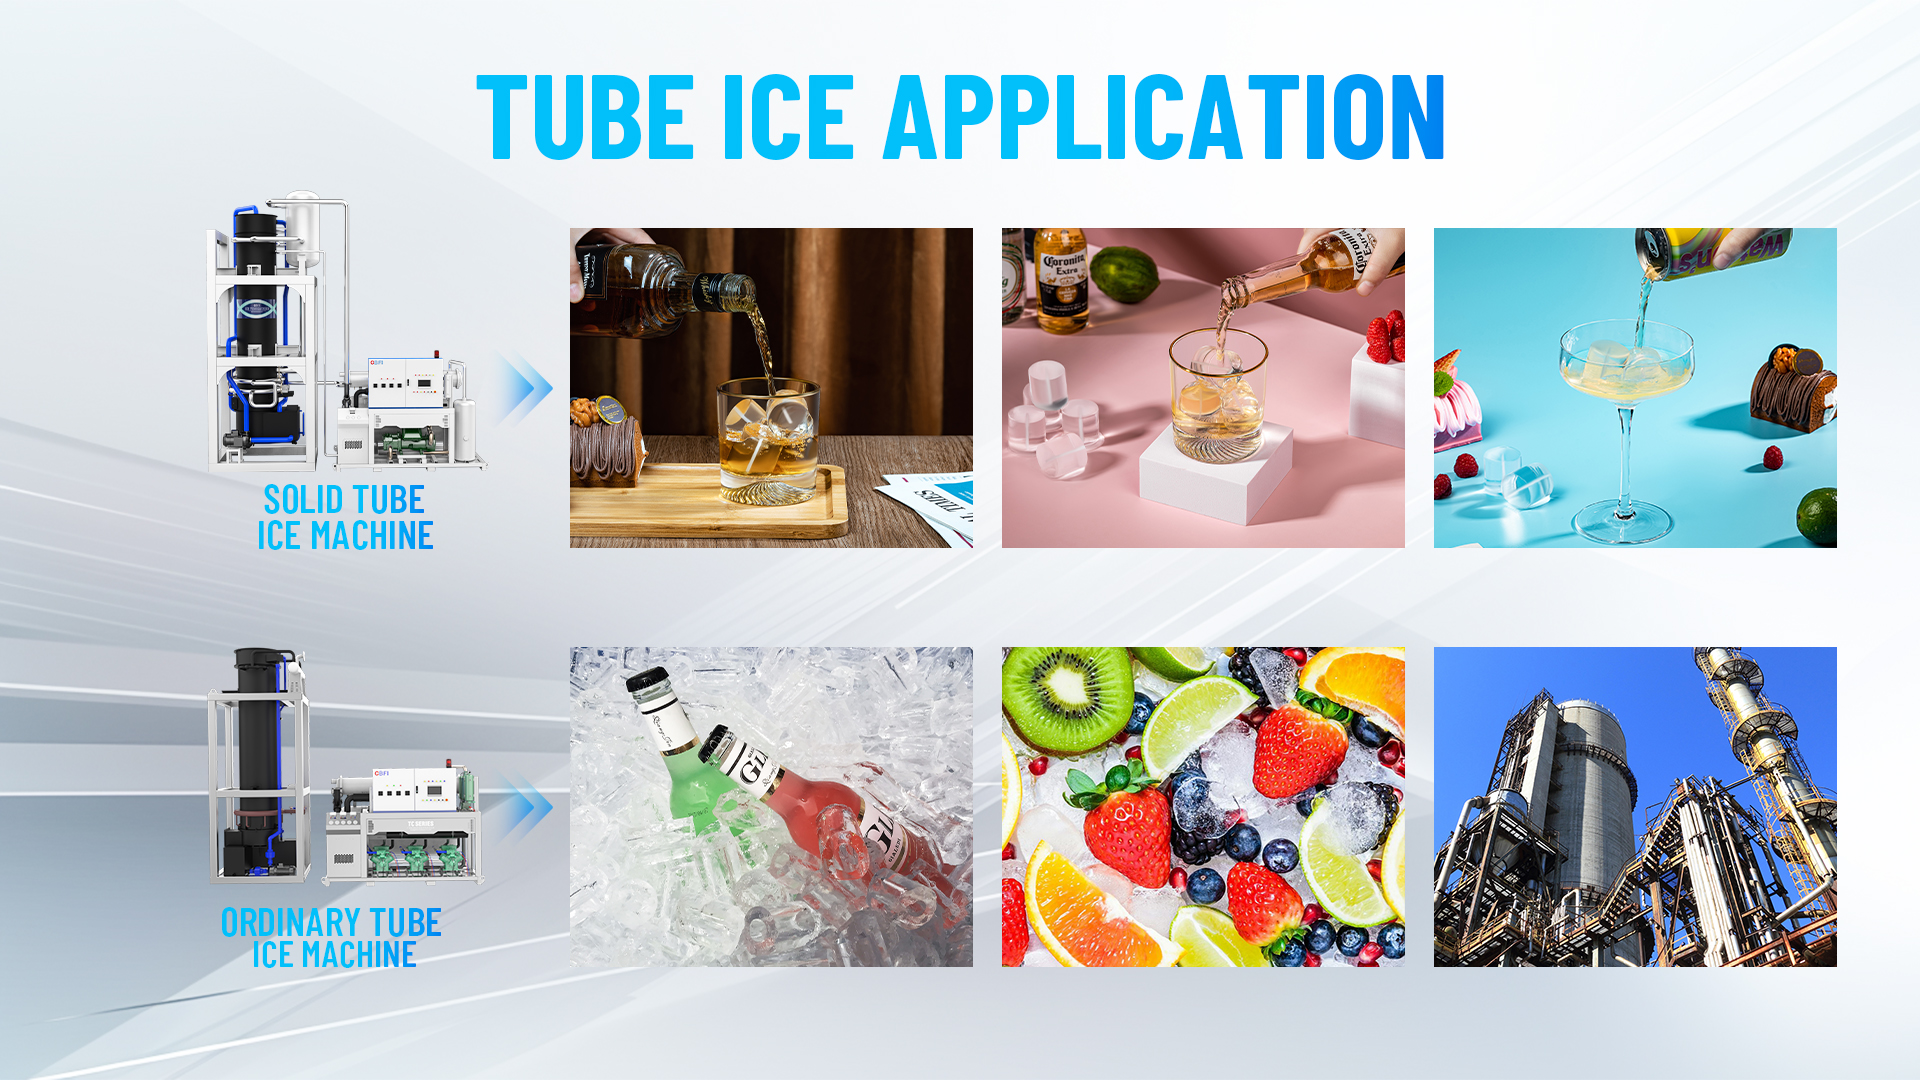 Application scenarios of tube ice